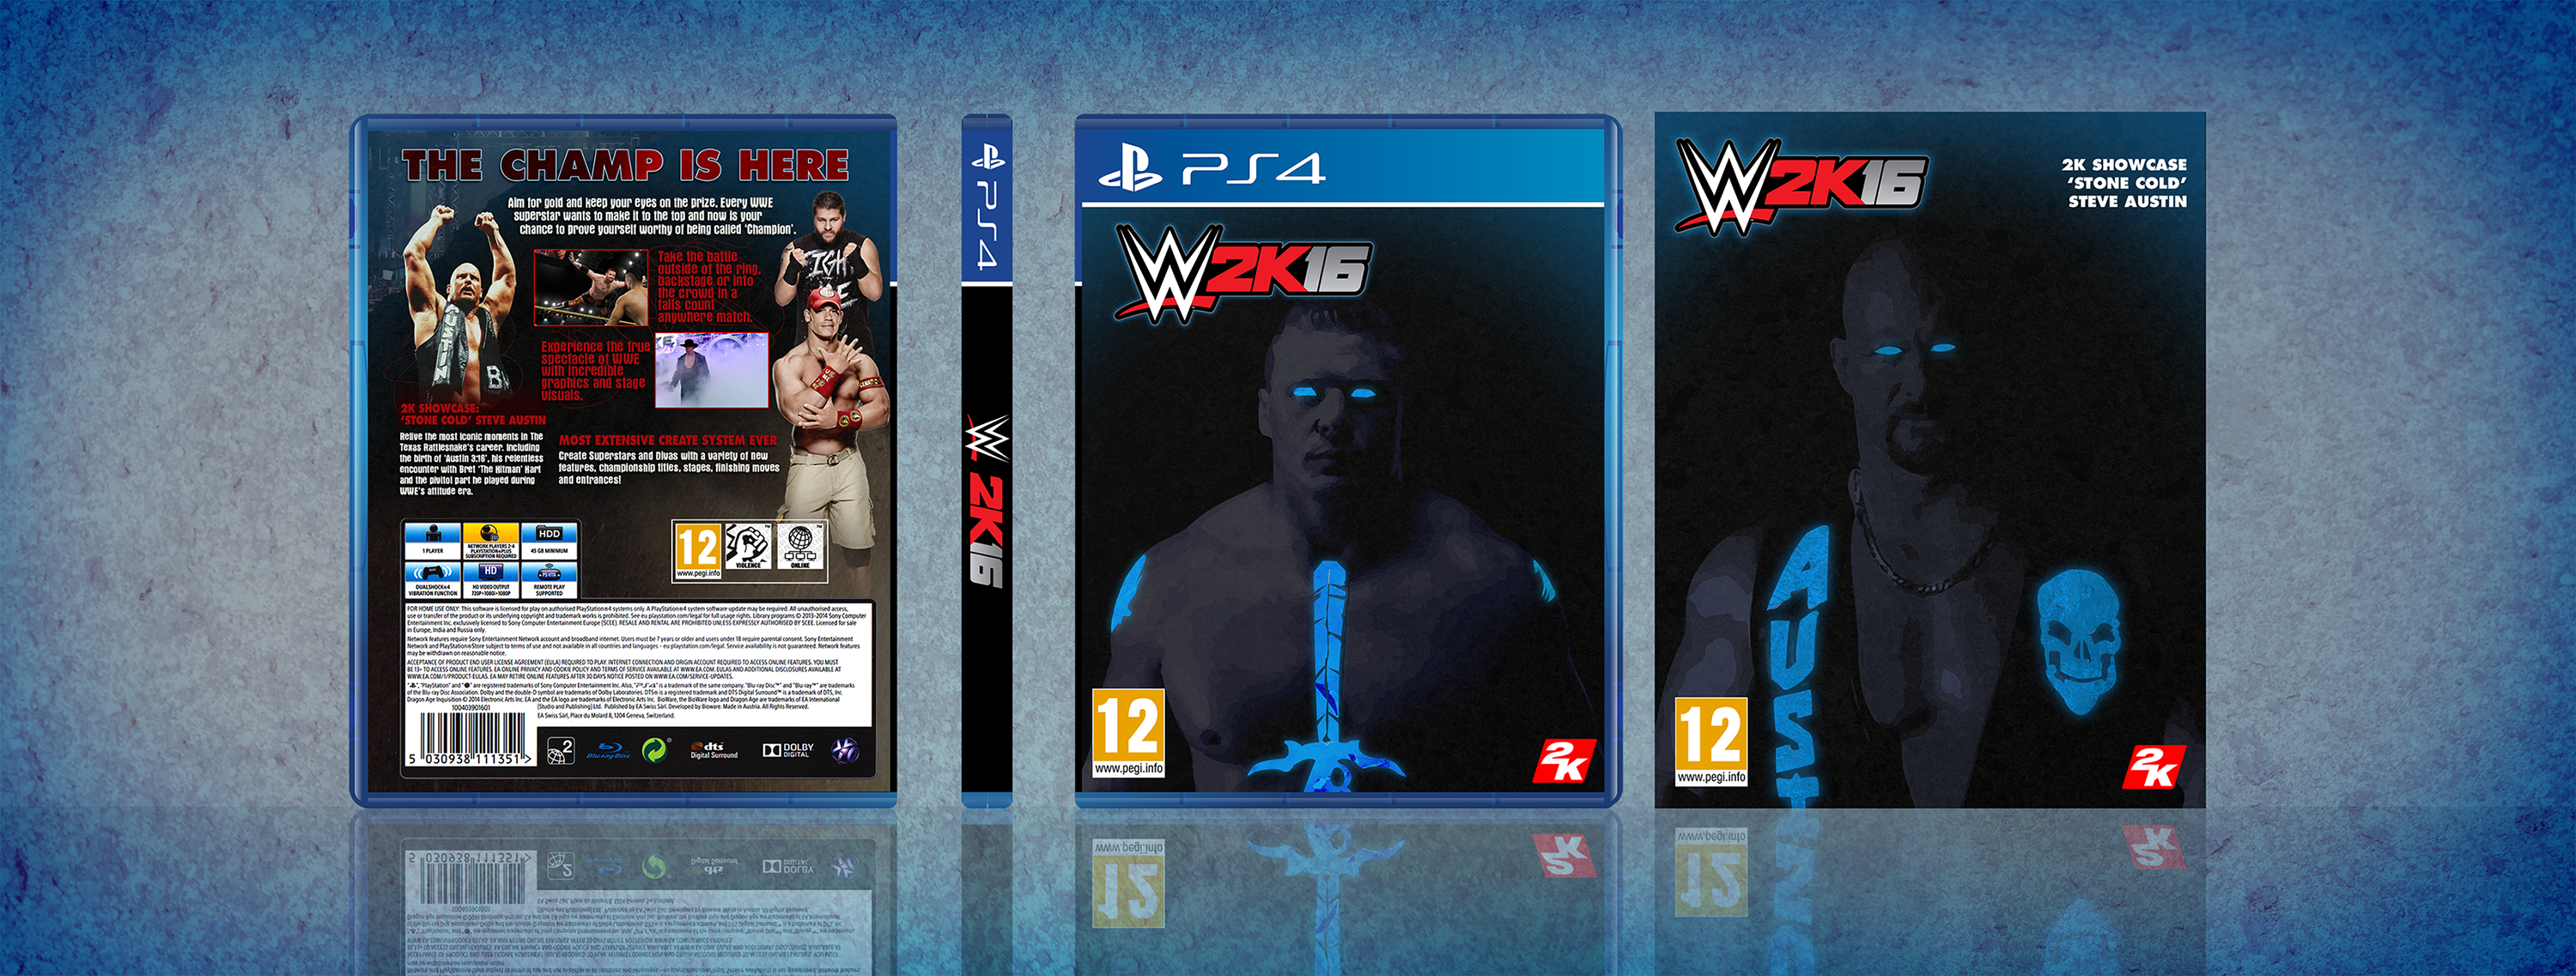 WWE 2K16 box cover